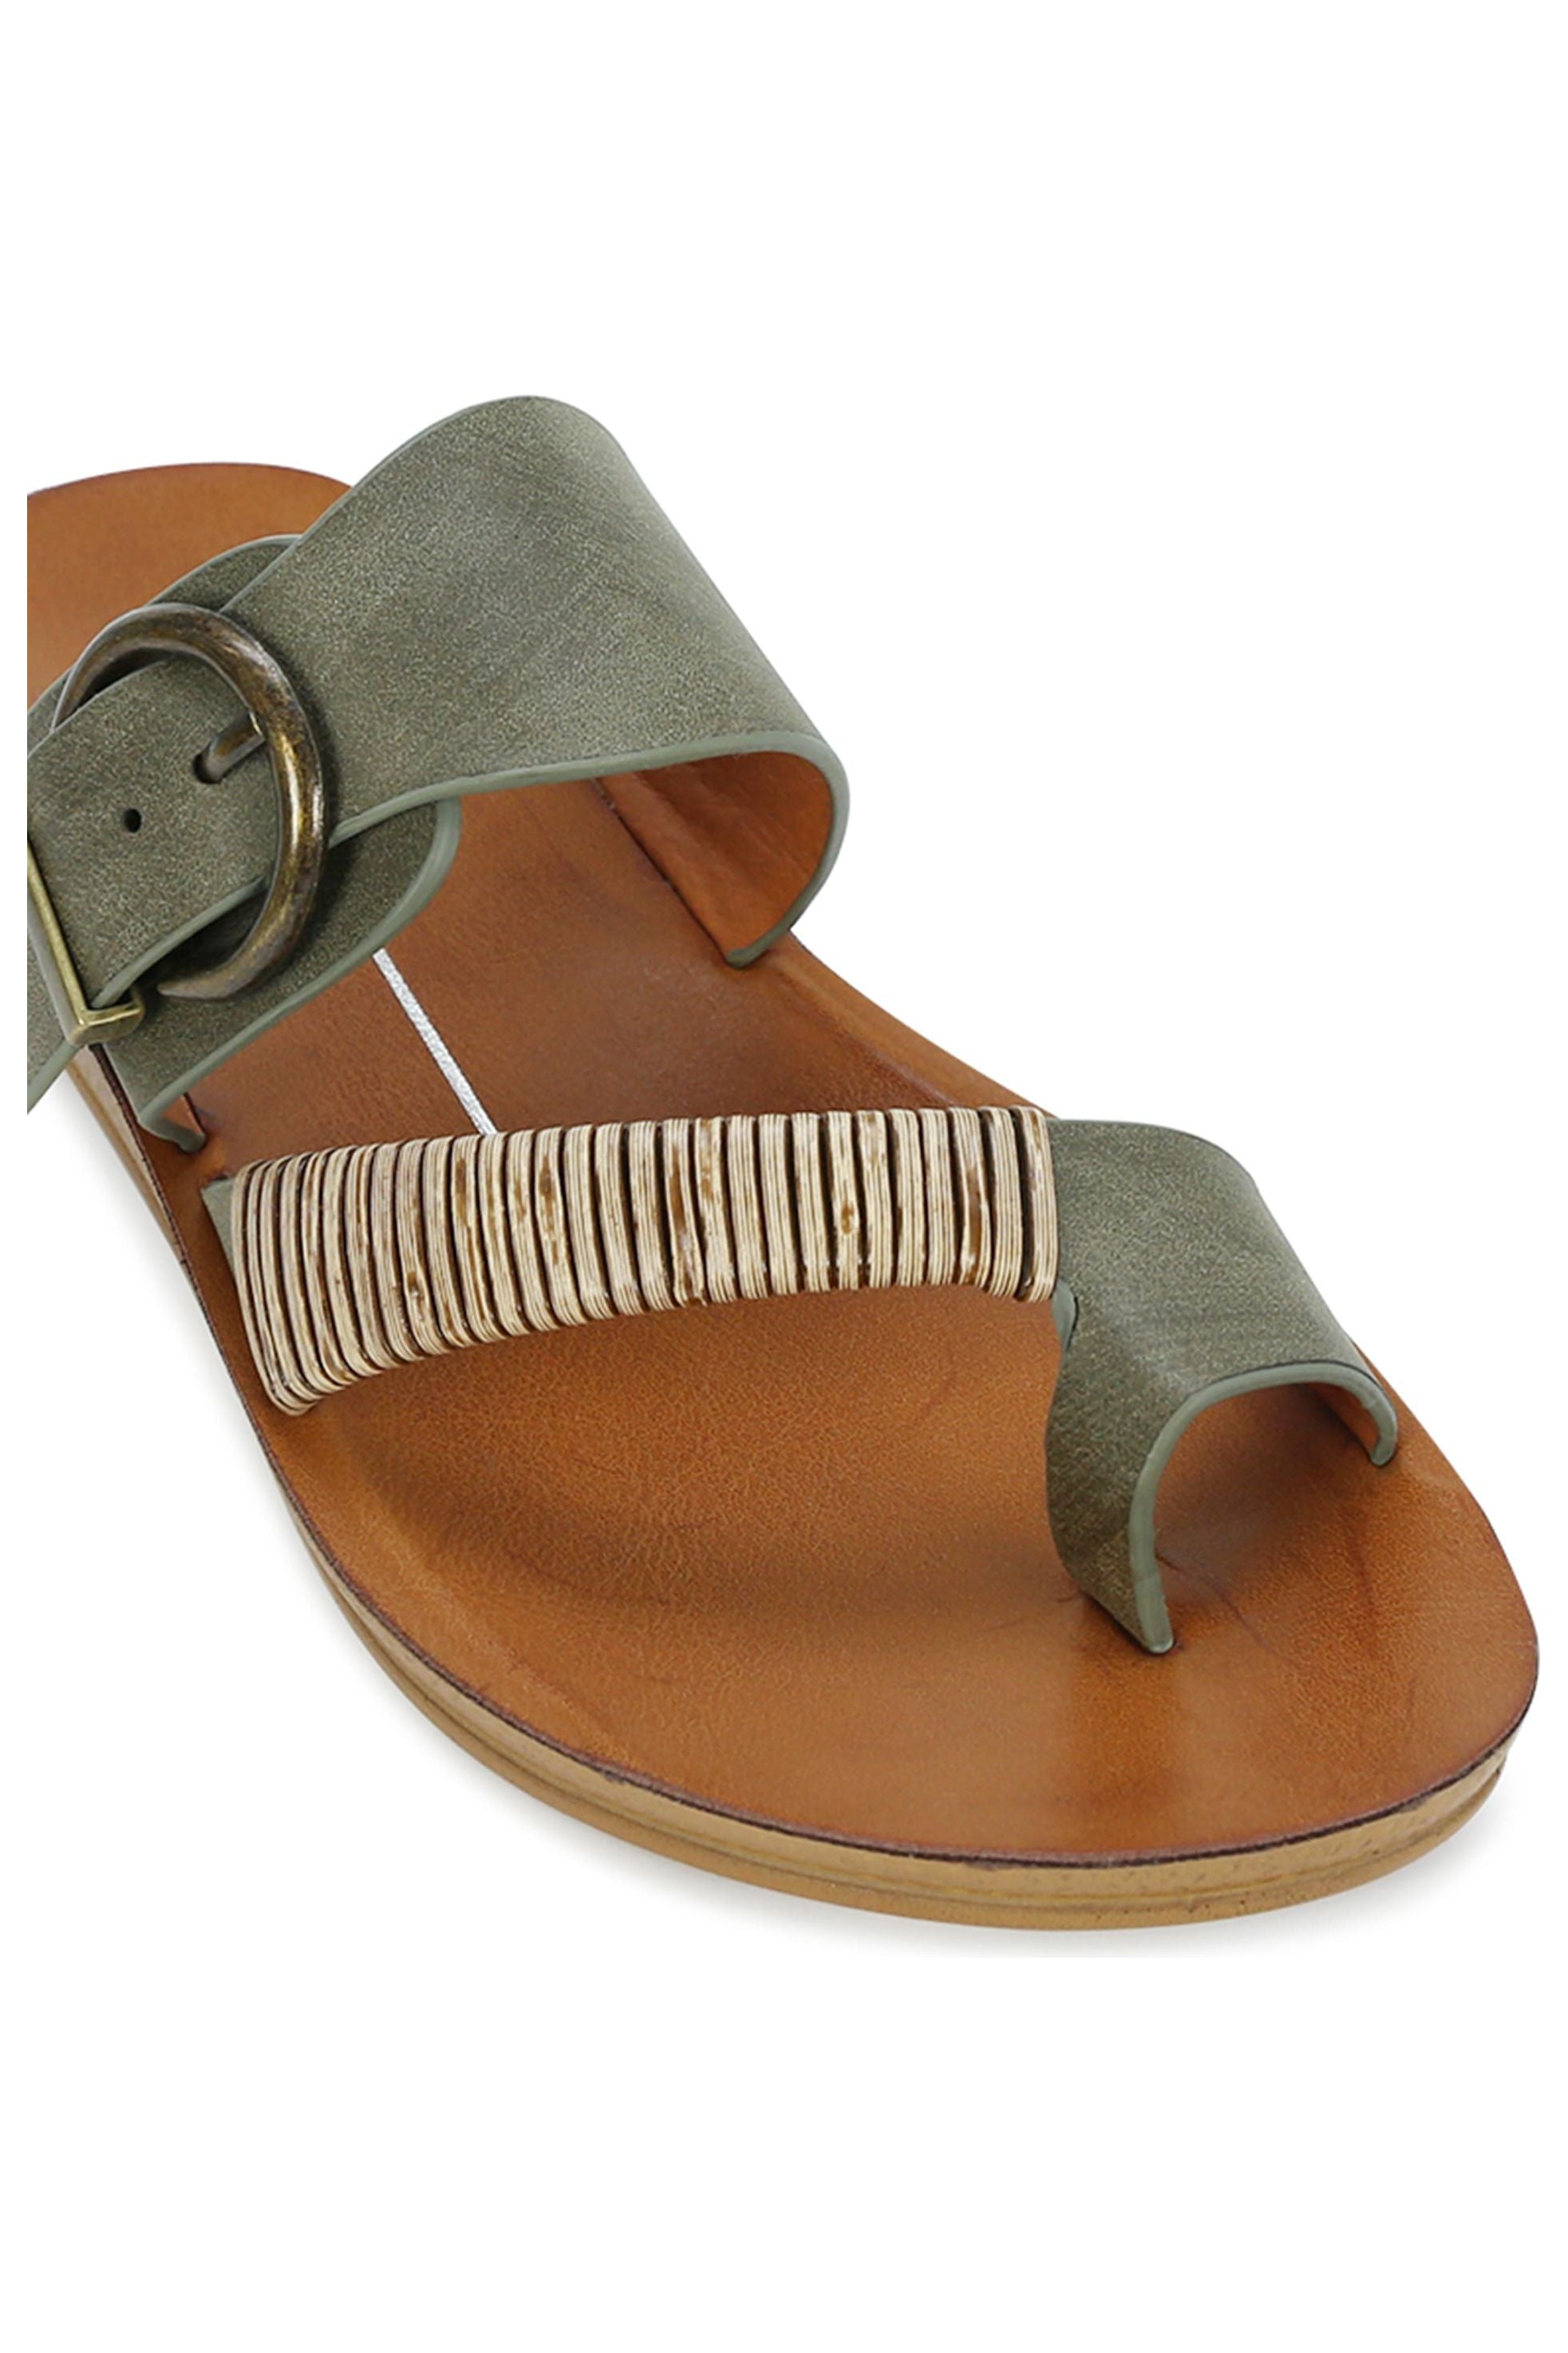 Los Cabos Slide Sandal - Style Bria, top, khaki